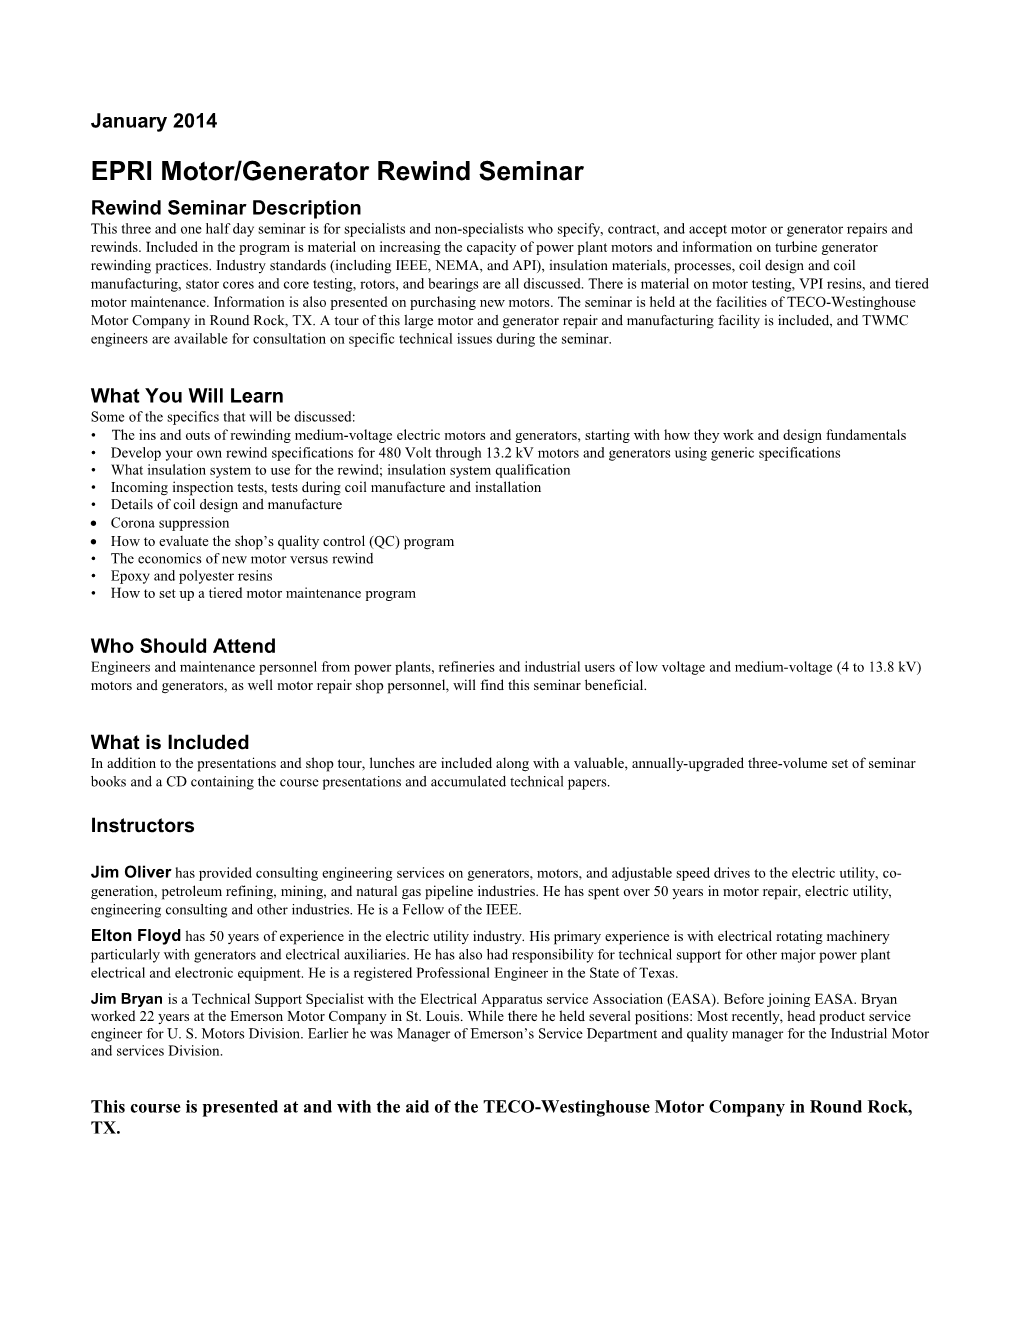 EPRI Motor/Generator Rewind Seminar